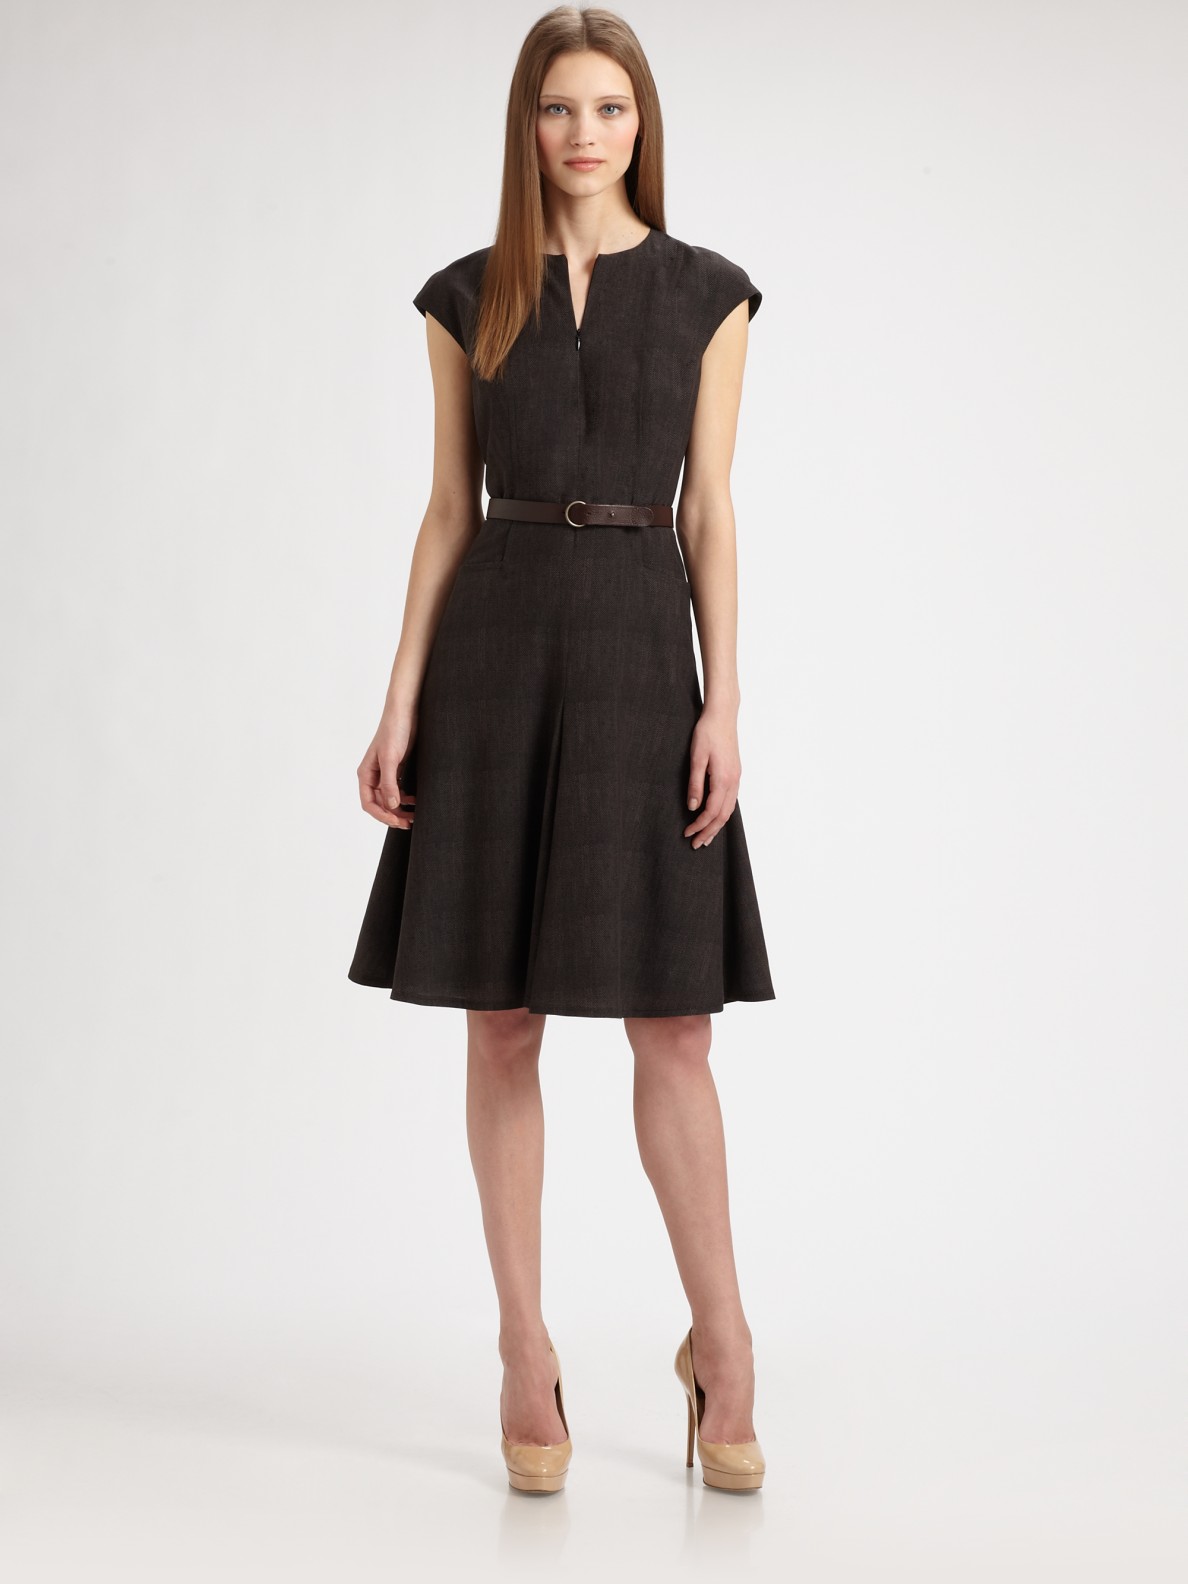 akris-punto-black-belted-wool-dress-product-1-3333933-293546676.jpeg